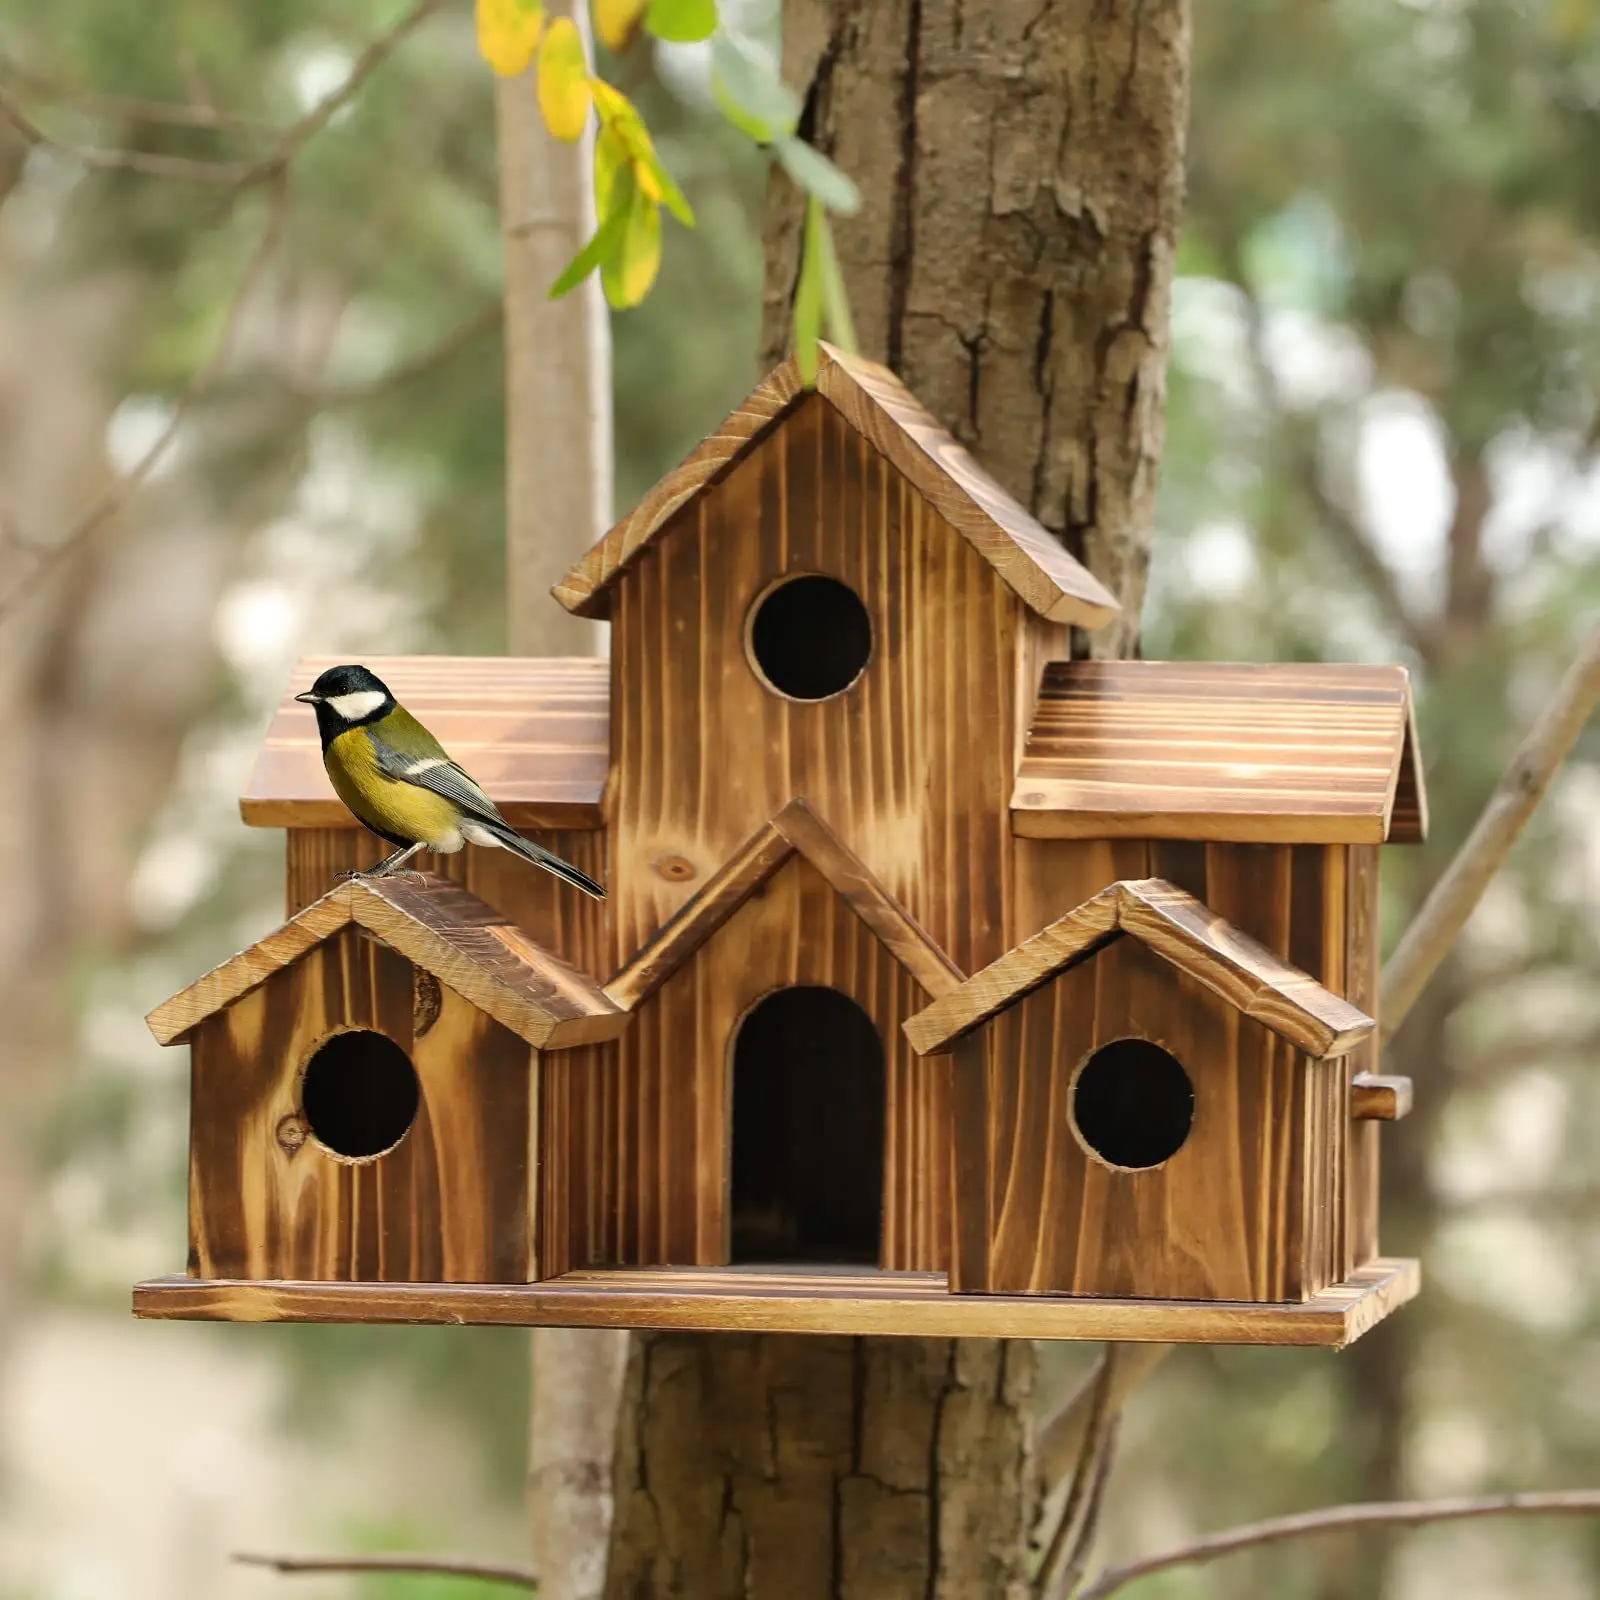 

Outside Large Bird House Wooden Hanging Bird Cage 6 Hole Handmade Natural Bird House for Backyard Courtyard Patio Decor Supplies